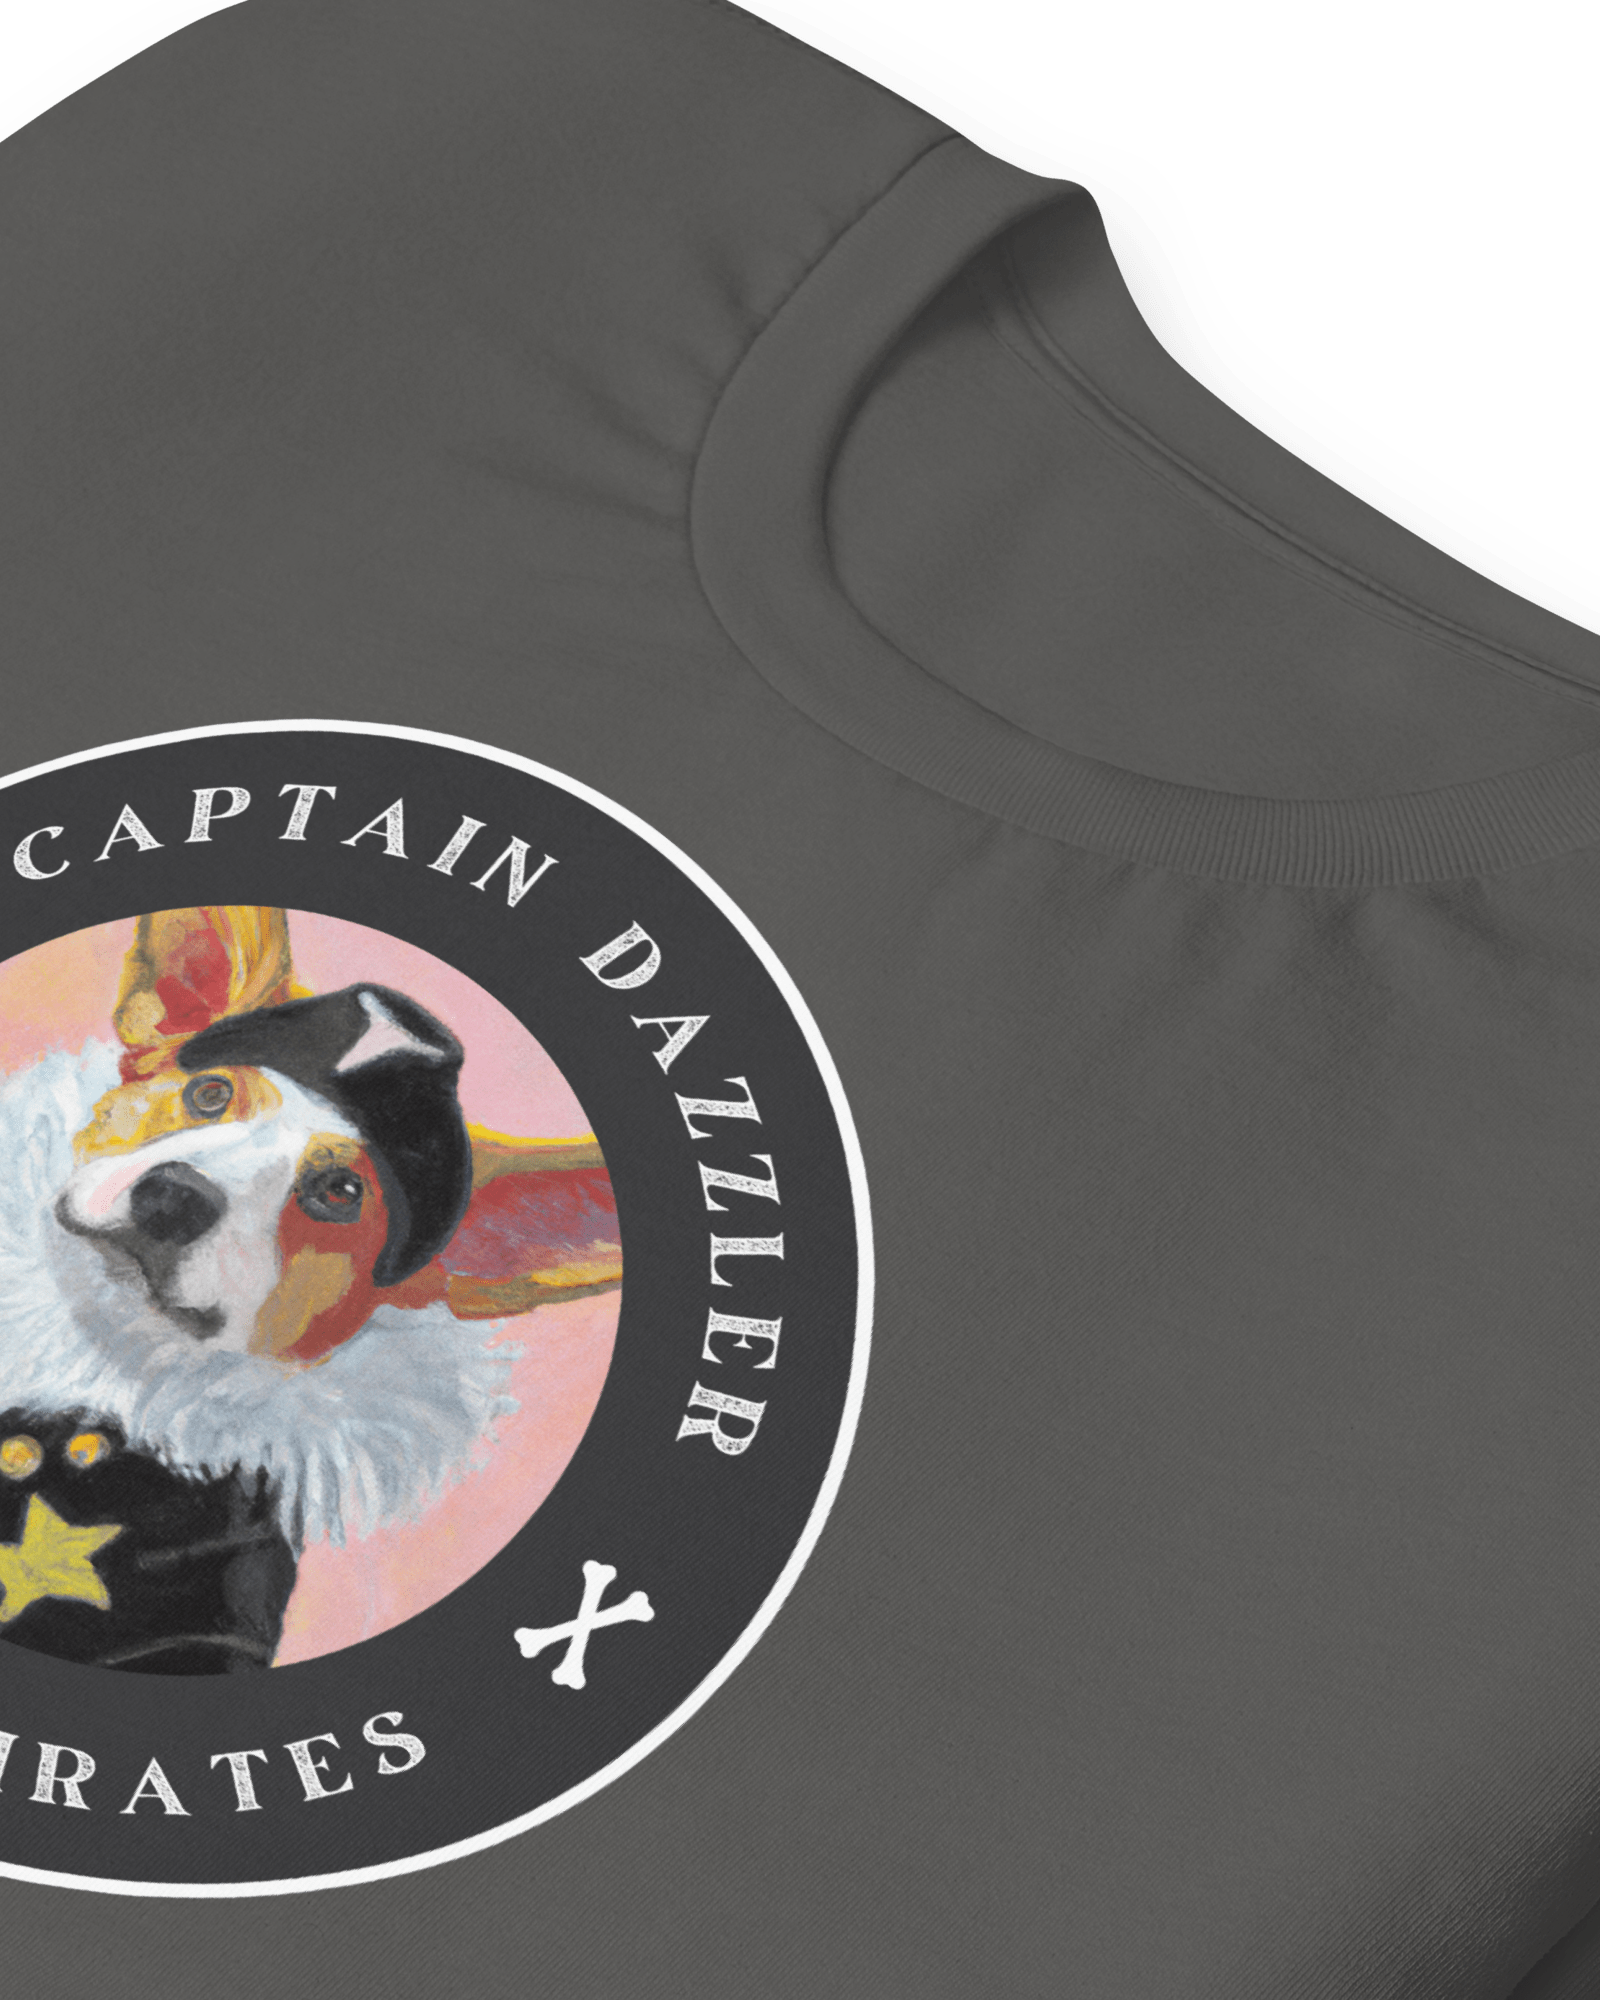 Captain Dazzler Corgishire Pirates T-shirt Shirts & Tops Jolly & Goode